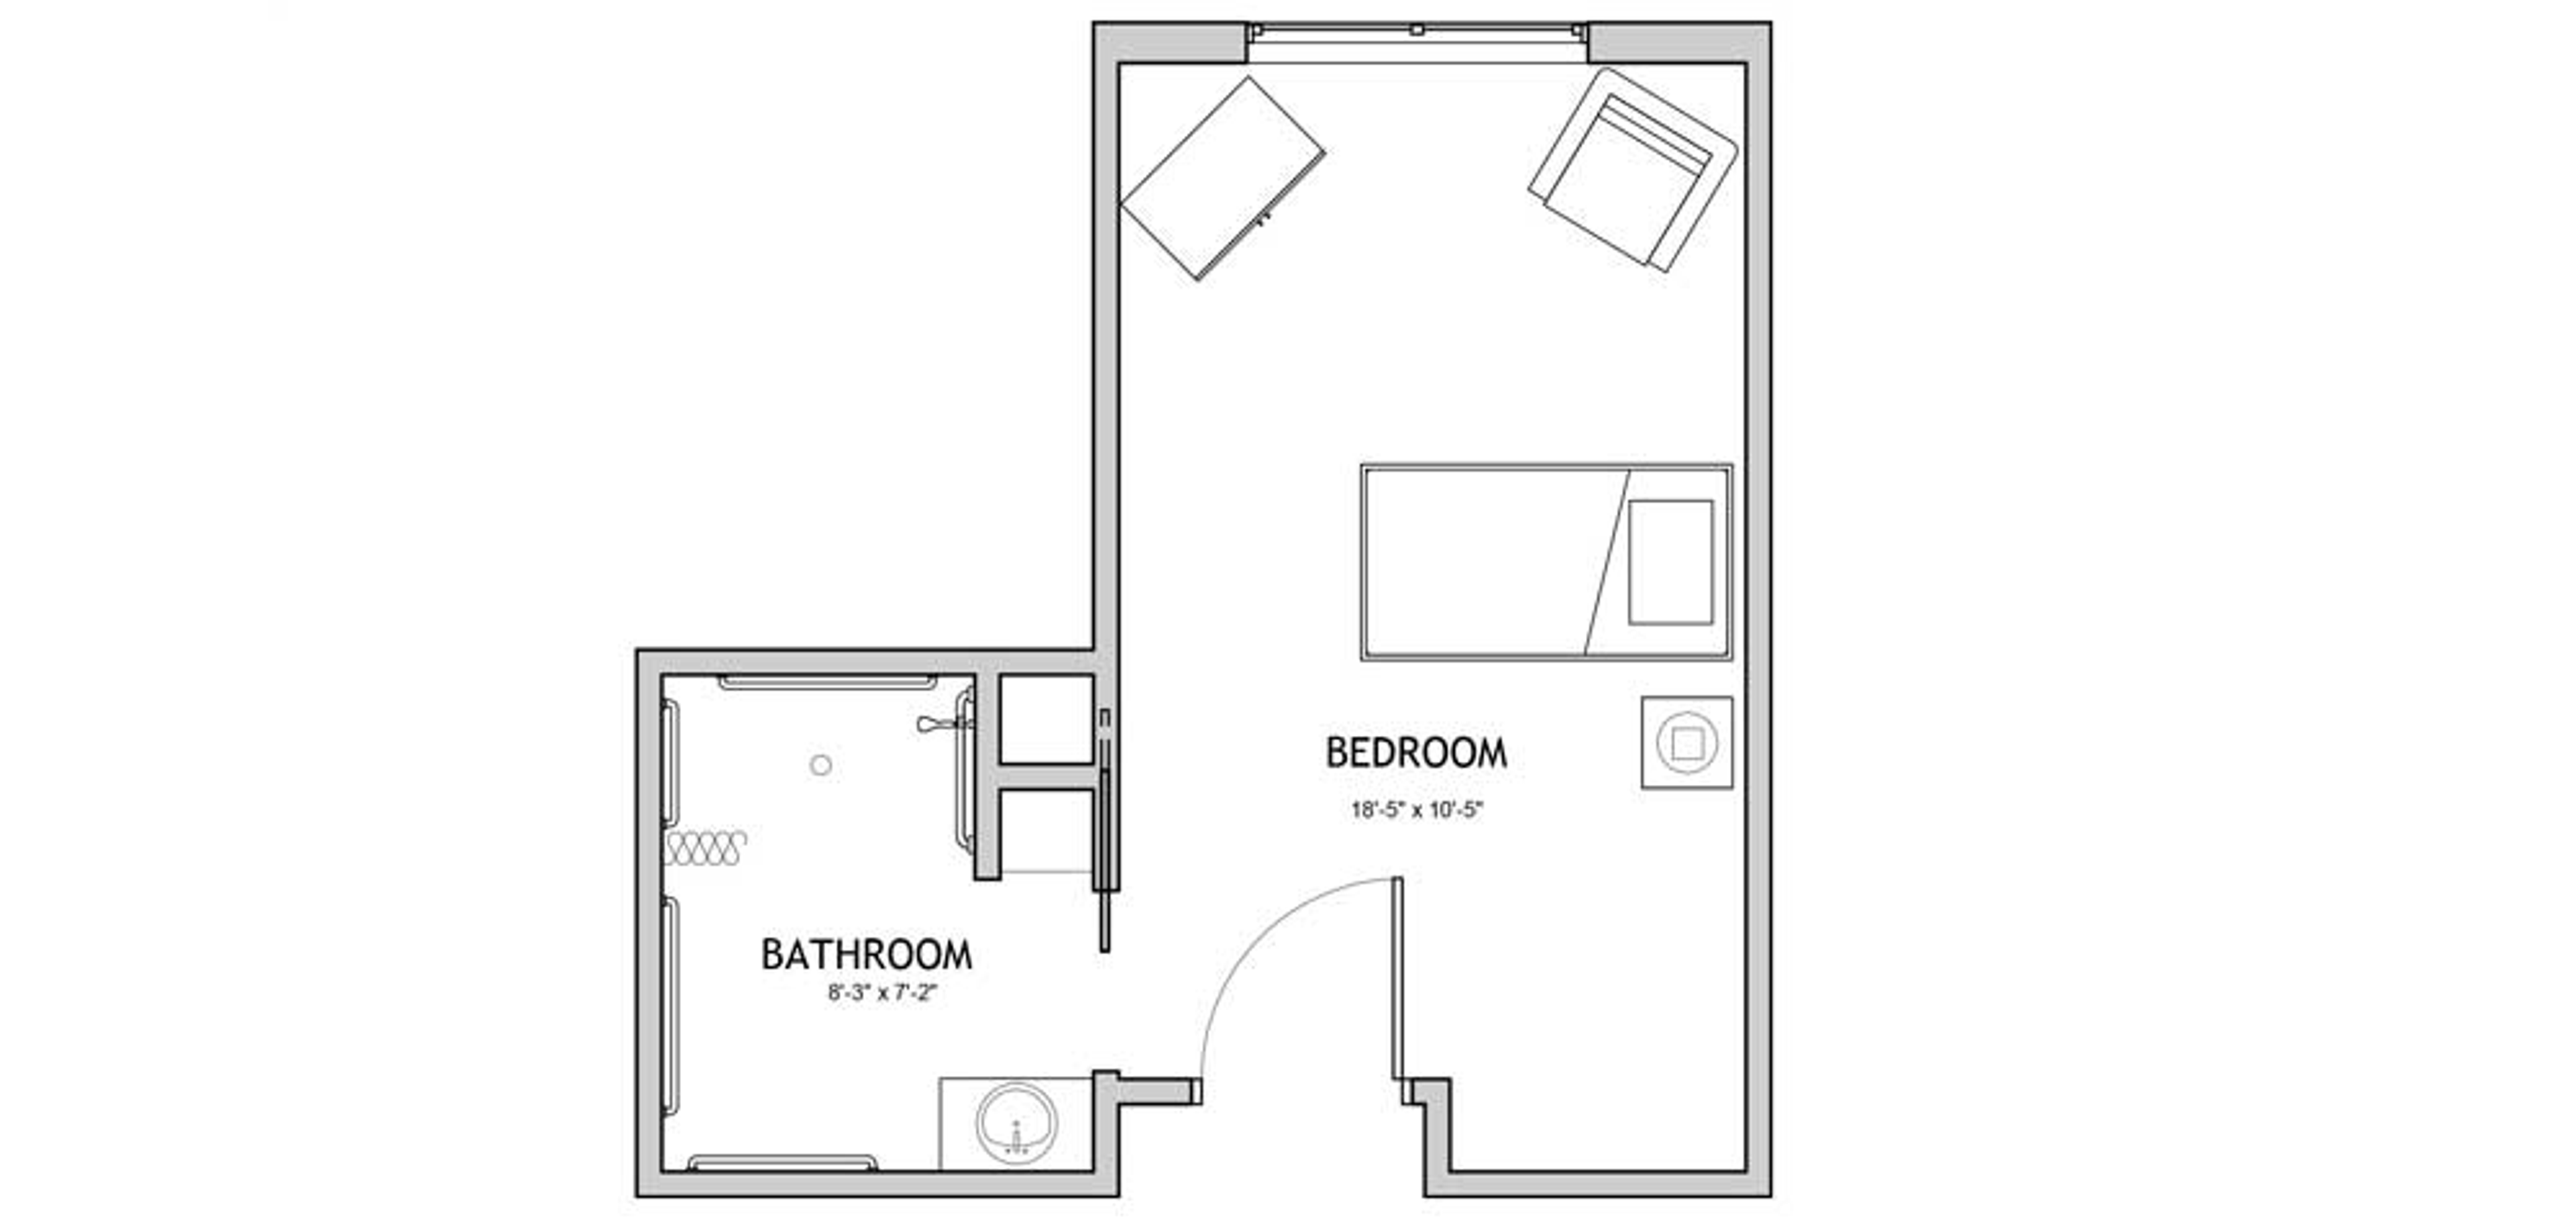 Floorplan - The Auberge at Brookfield - 1 bed, 1 bath, 274 sq. ft. Memory Care